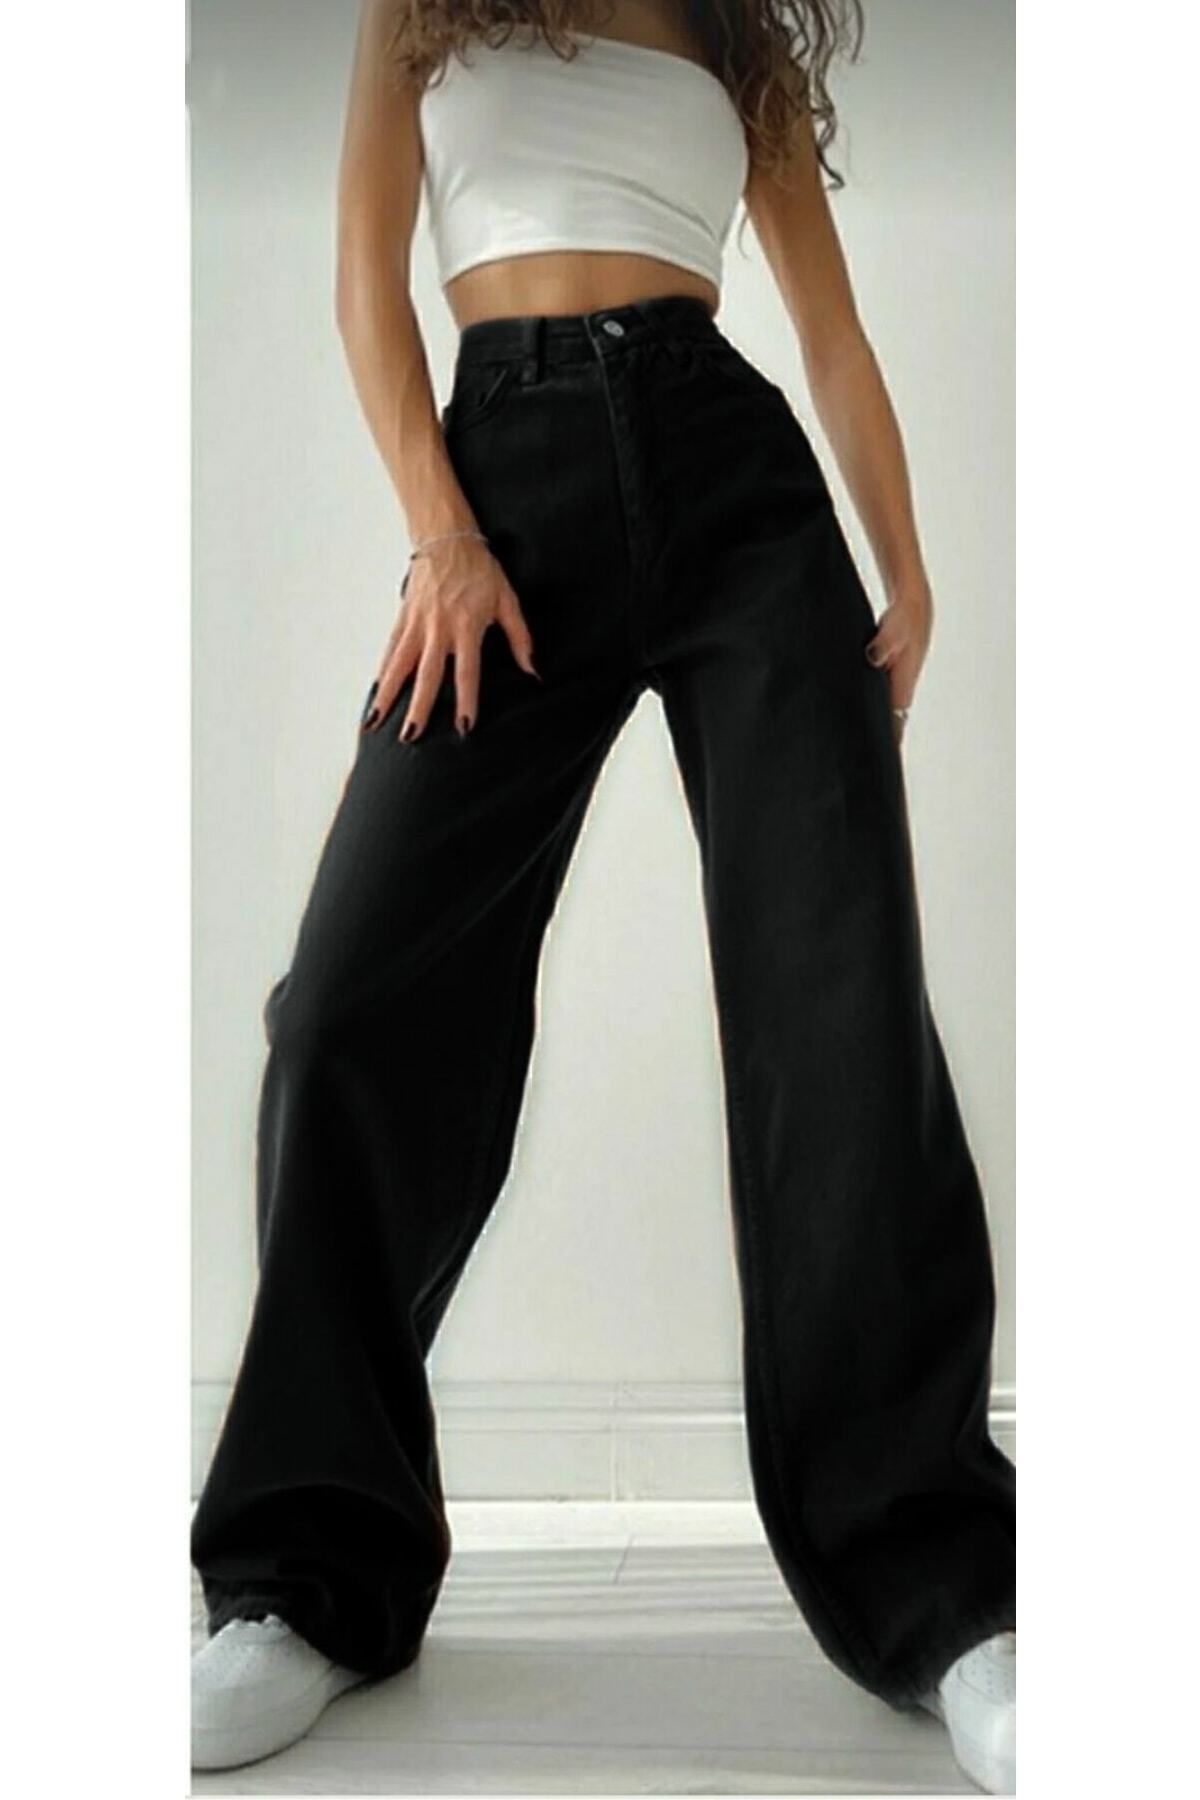 geenz manifacture Gabrielle Siyah Power Likralı Süper Yüksek Bel Salaş Jeans Palazzo Pantolon